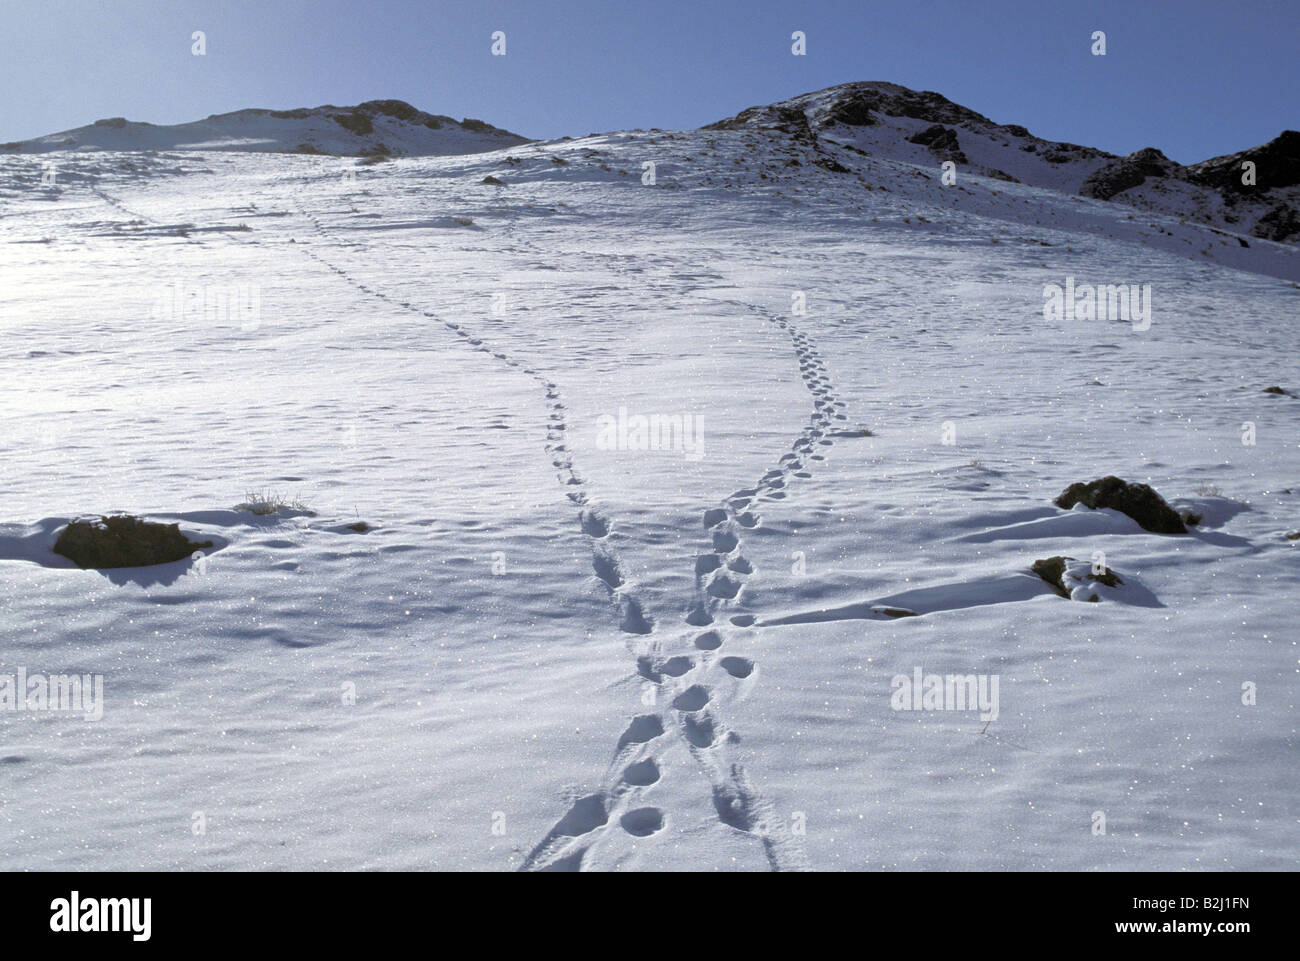 zoology / animals, mammal / mammalian, snow leopard, (Panthera unica), tracks in snow, Altay Mountain, Mongolia, distribution: I Stock Photo